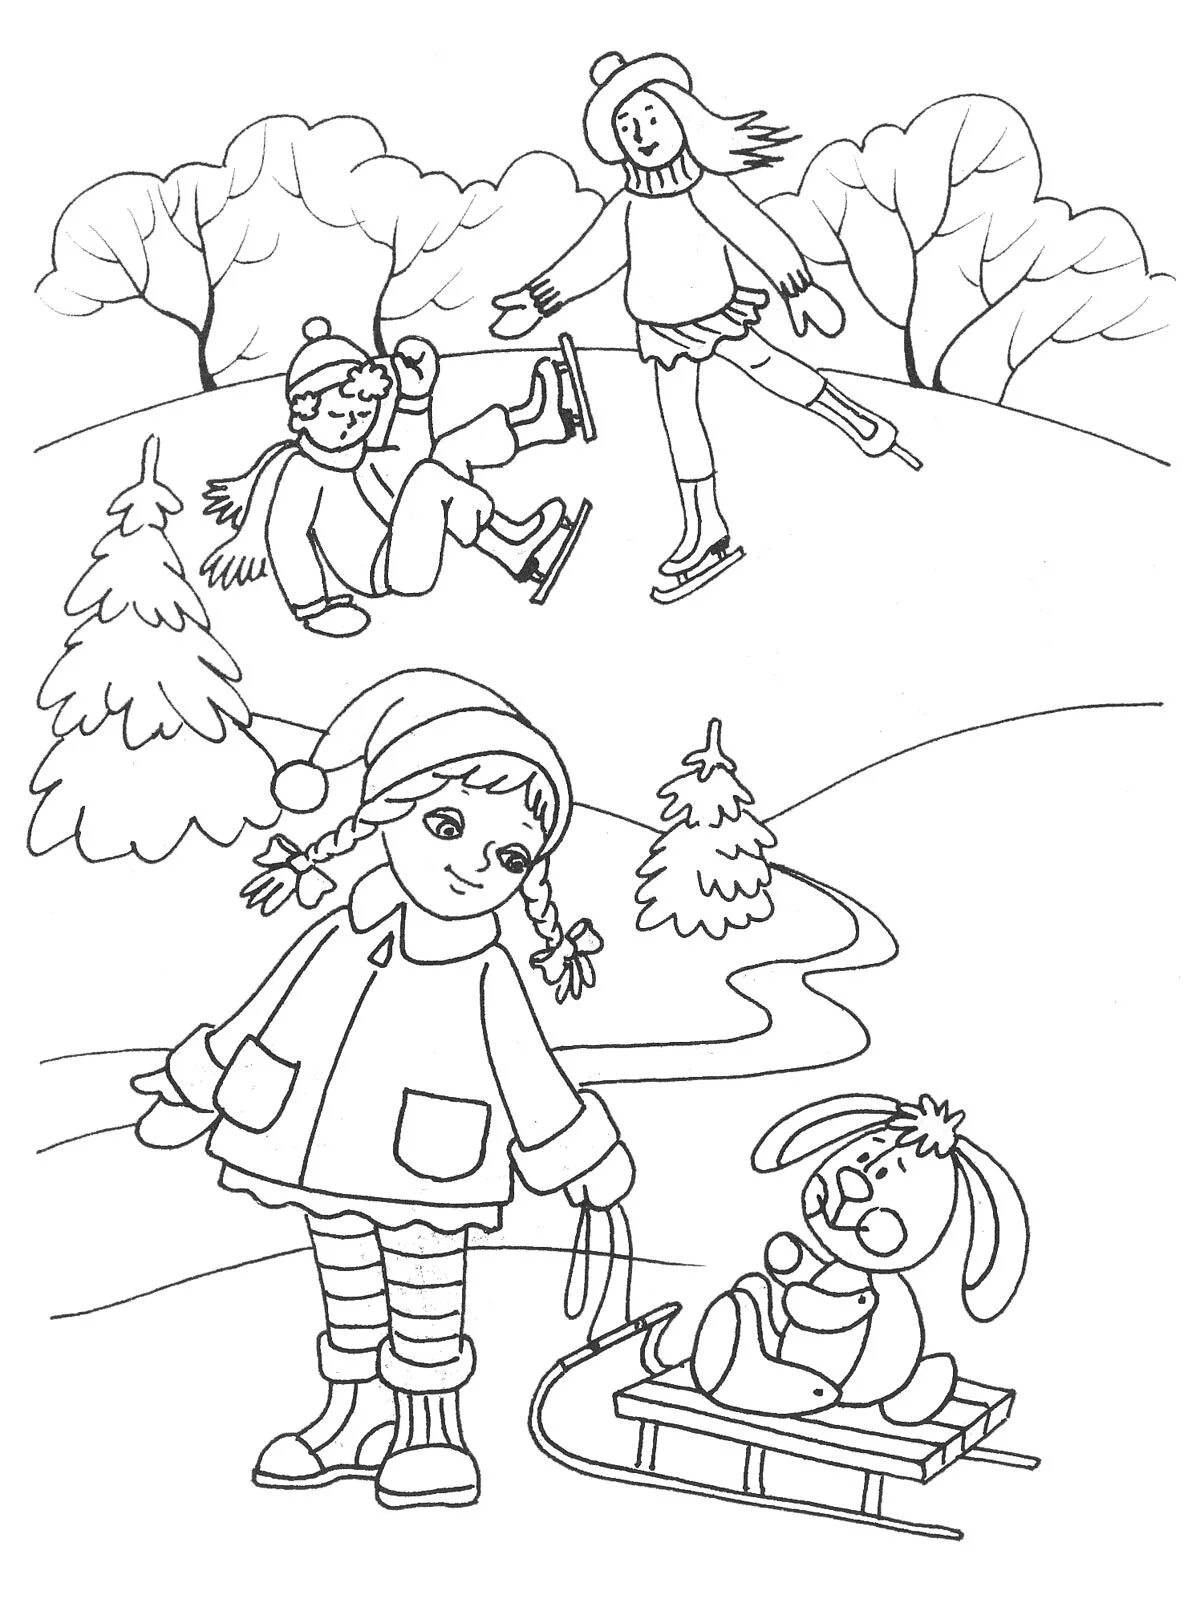 Children fun in winter #4